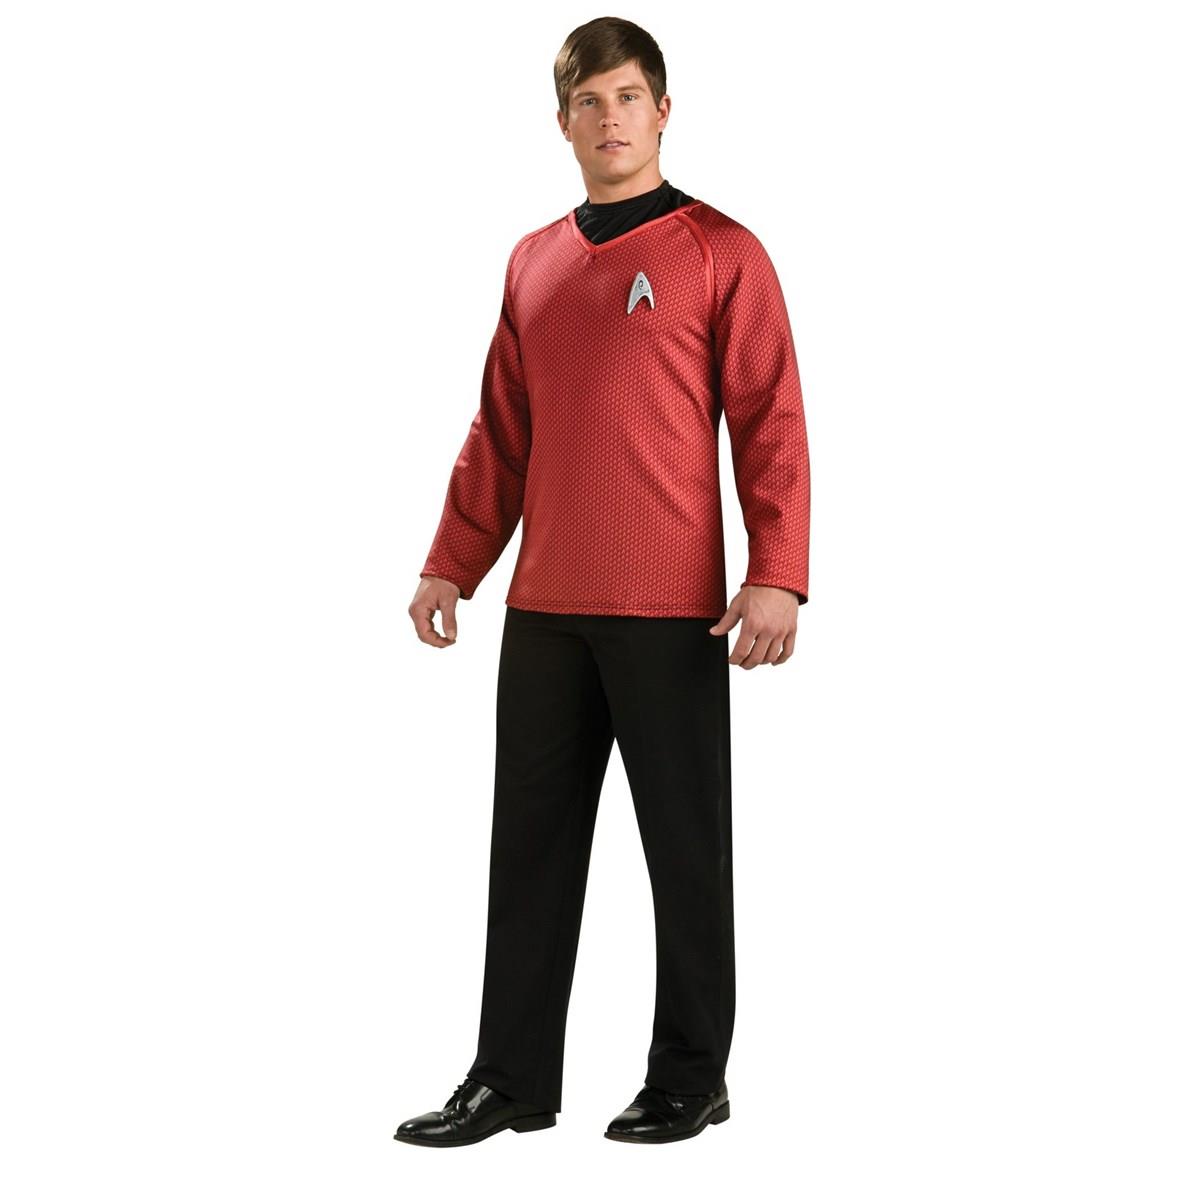 Picture of Rubies Costumes 284410 Halloween Star Trek Mens Grand Heritage Scotty Costume - Small